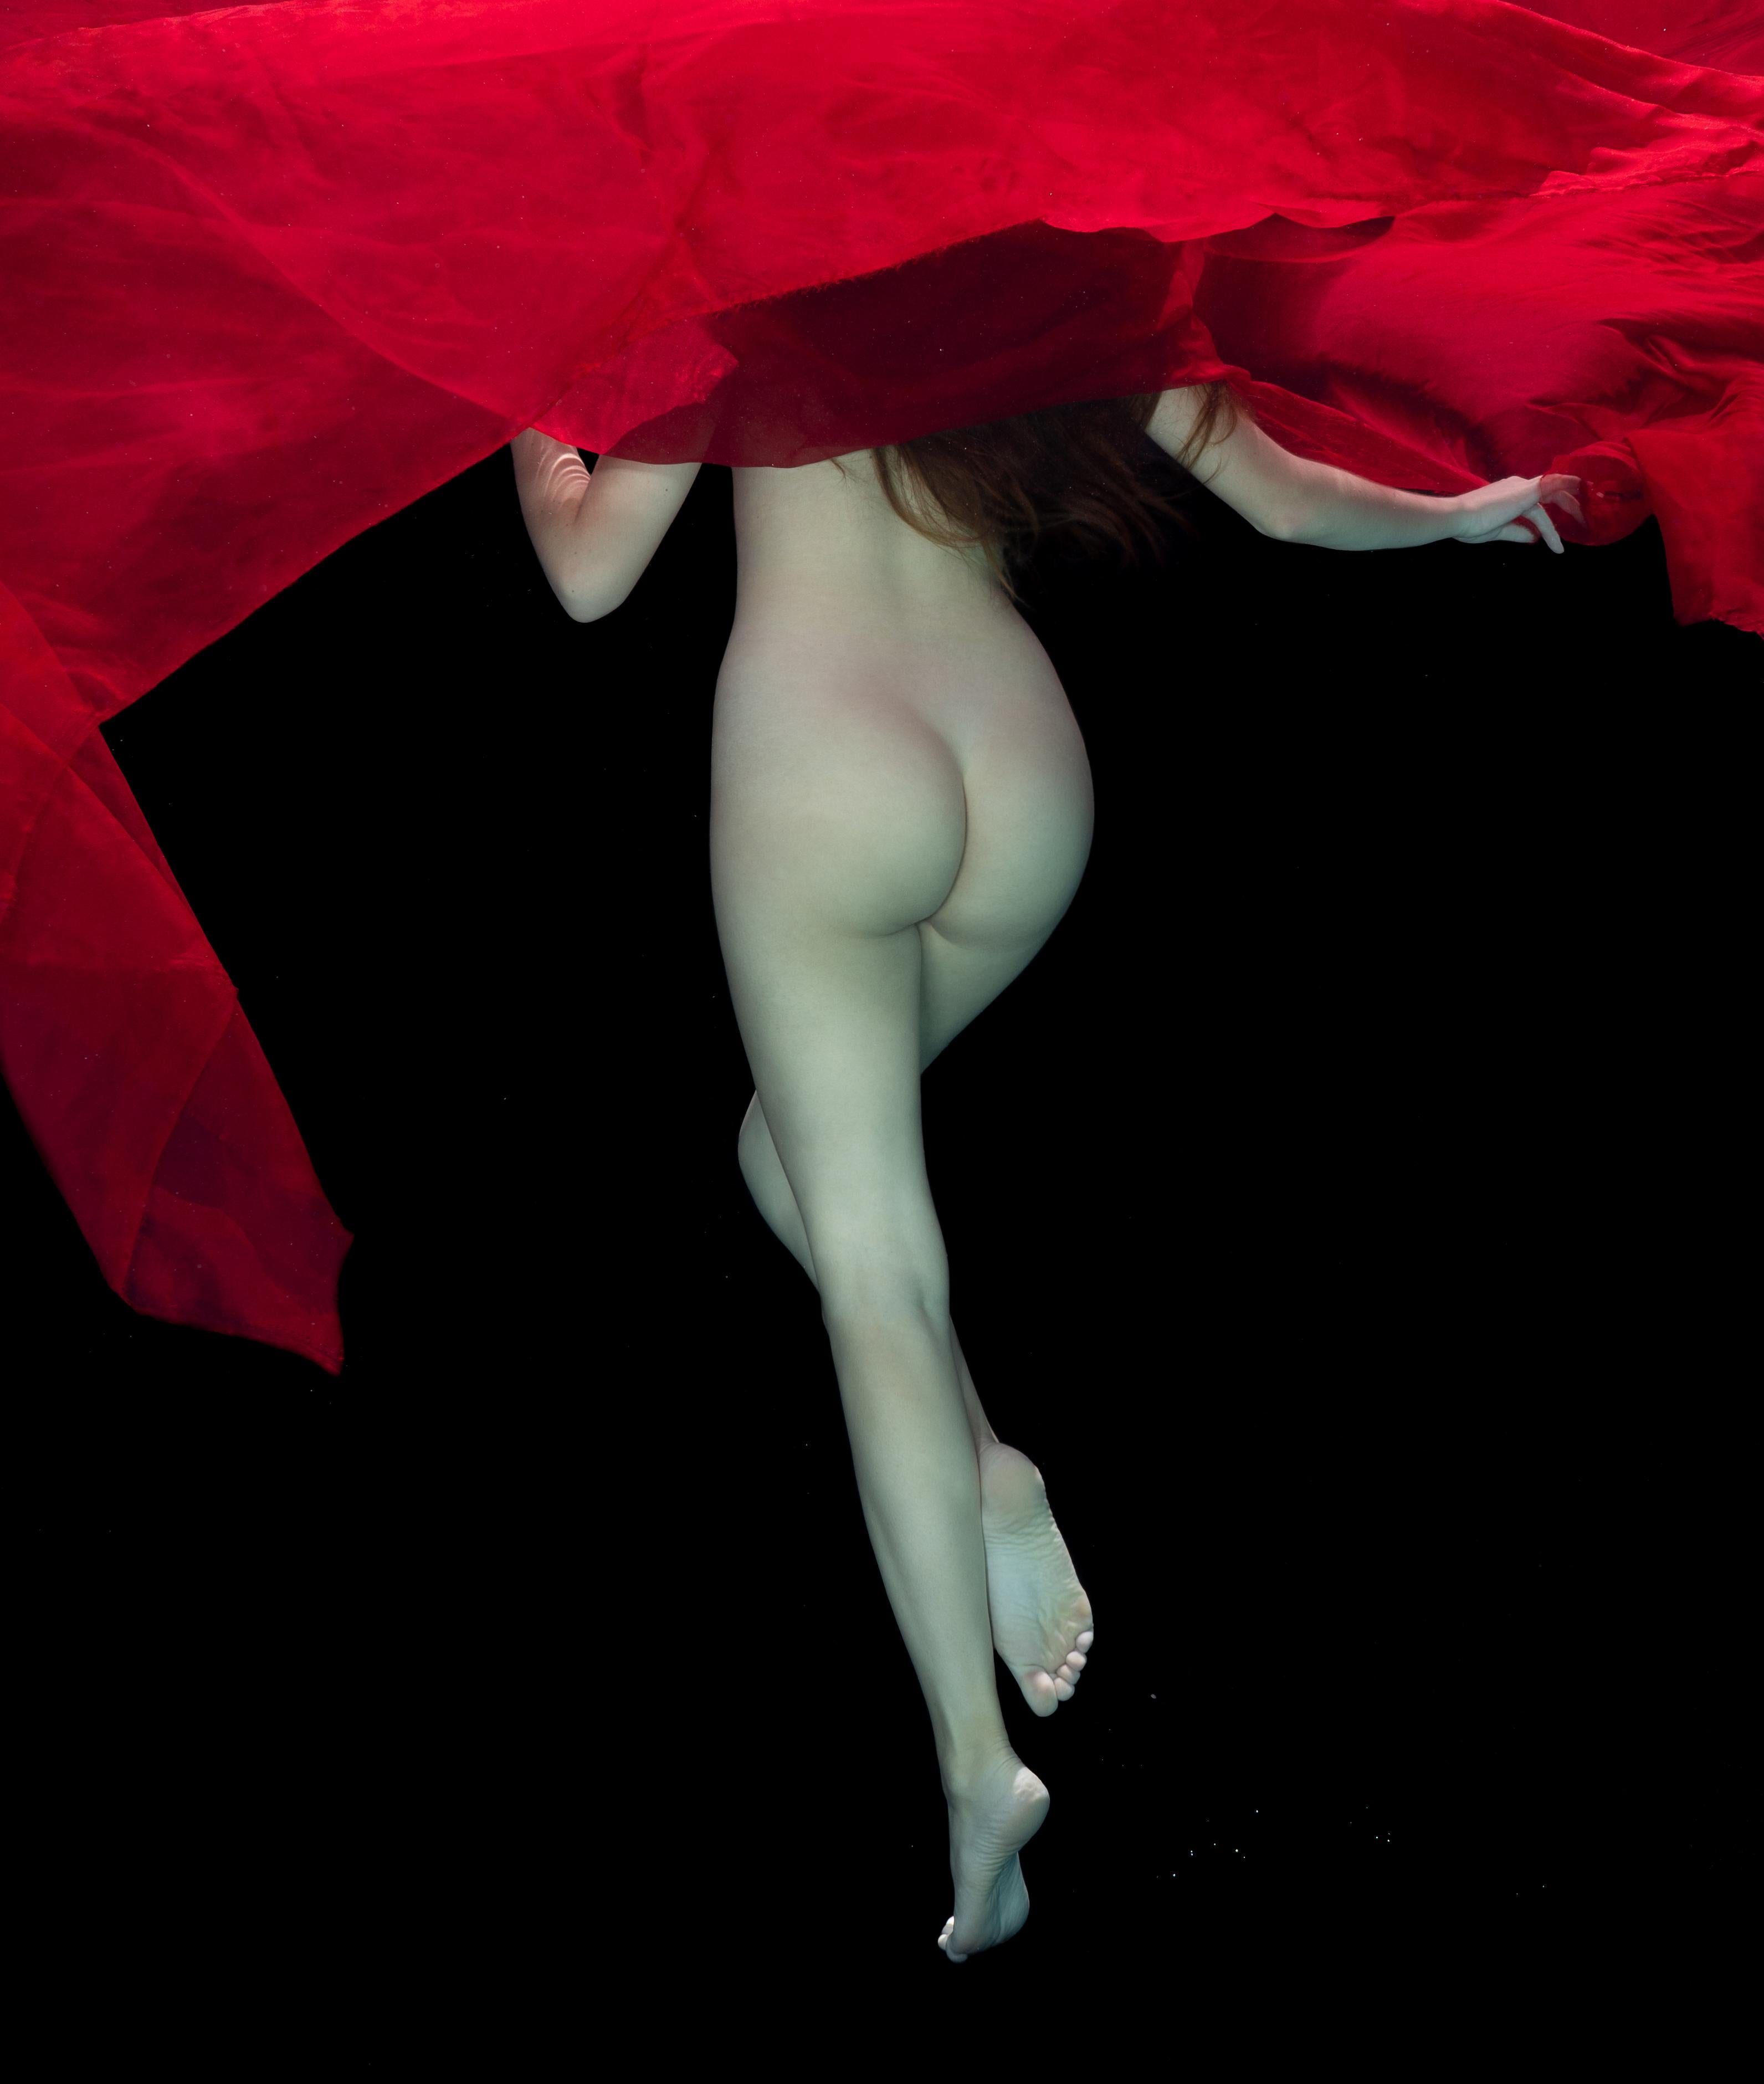 Hibiscus - underwater nude photograph - archival pigment print 18